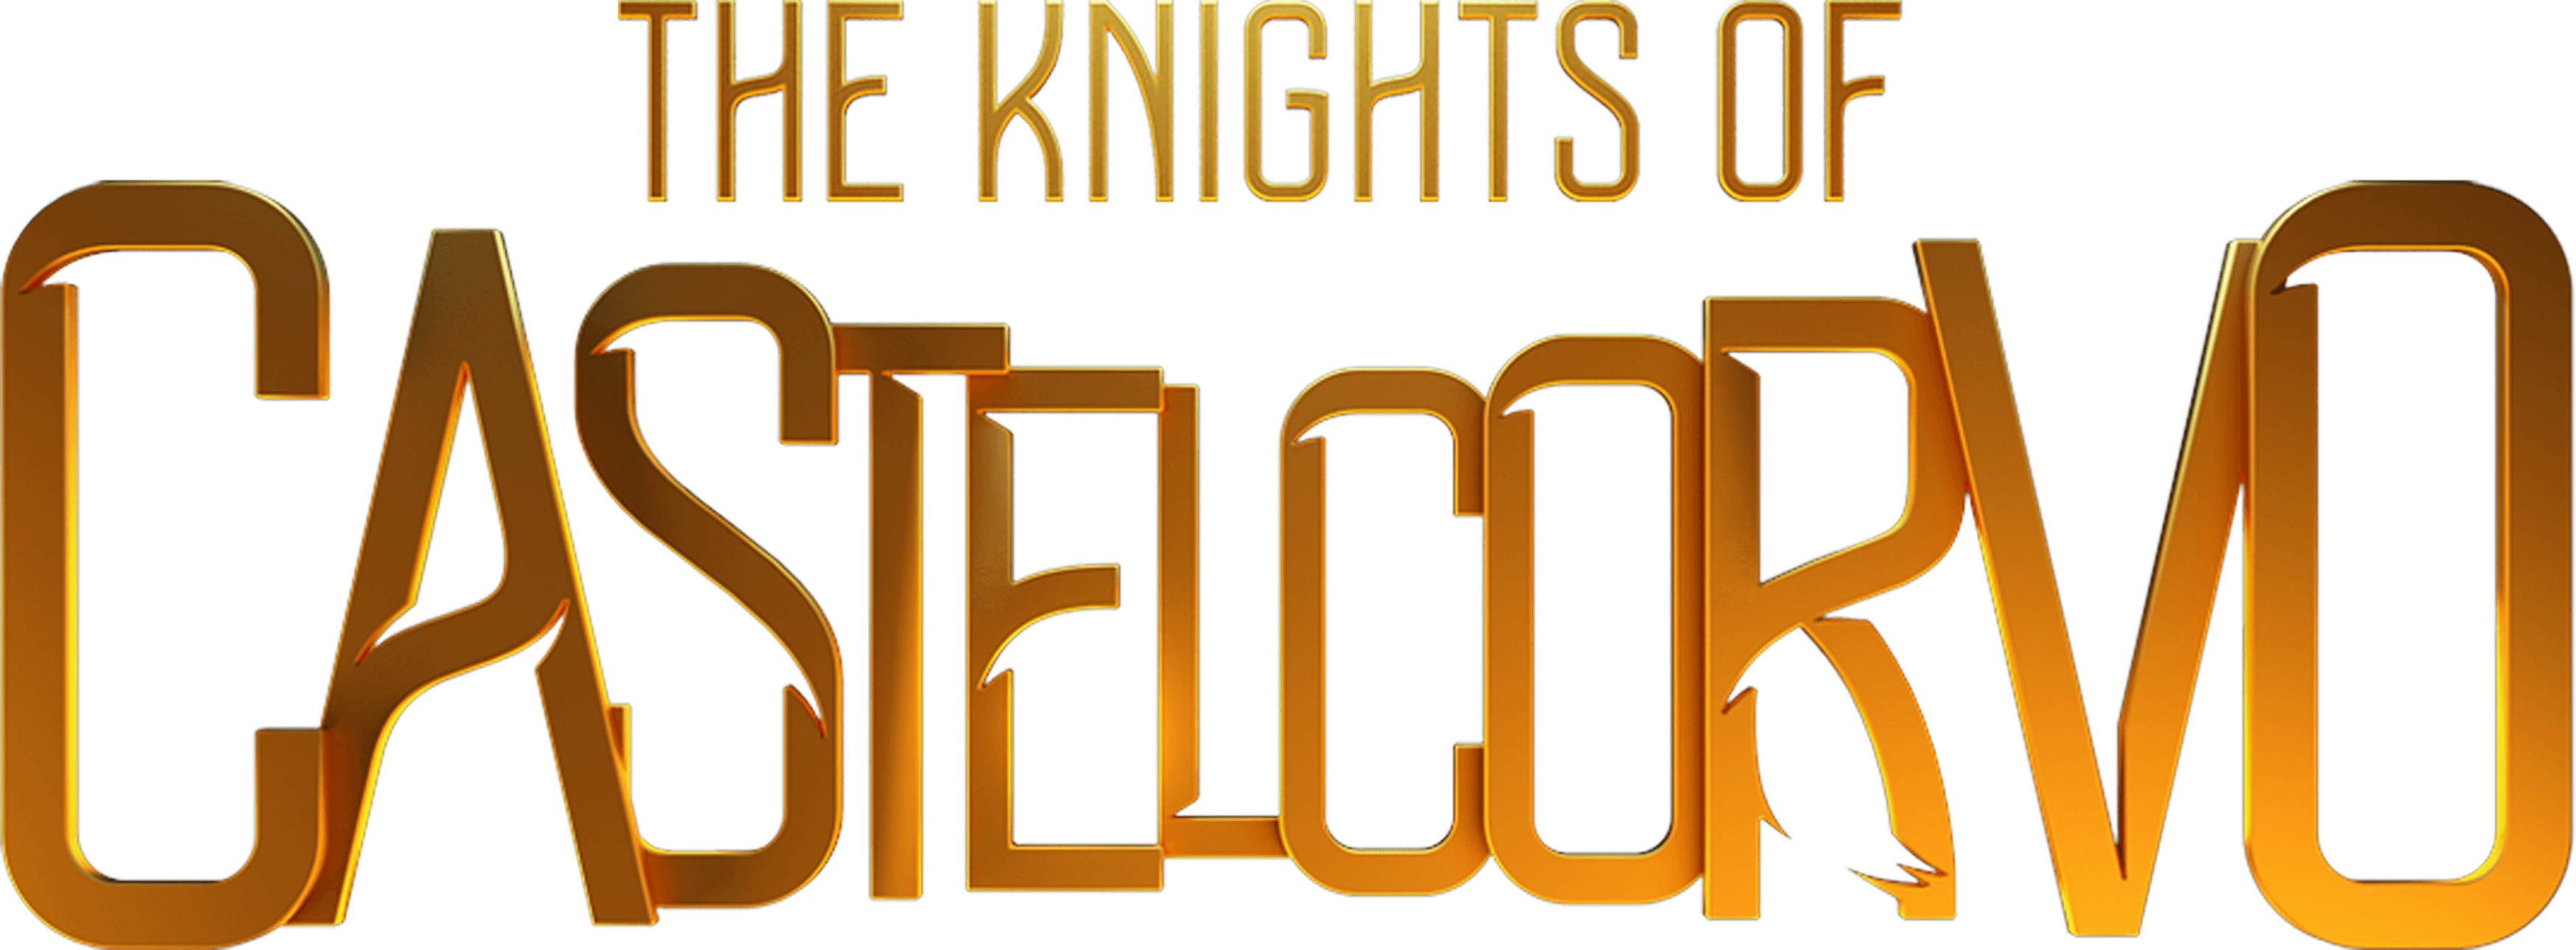 The Knights of Castelcorvo logo